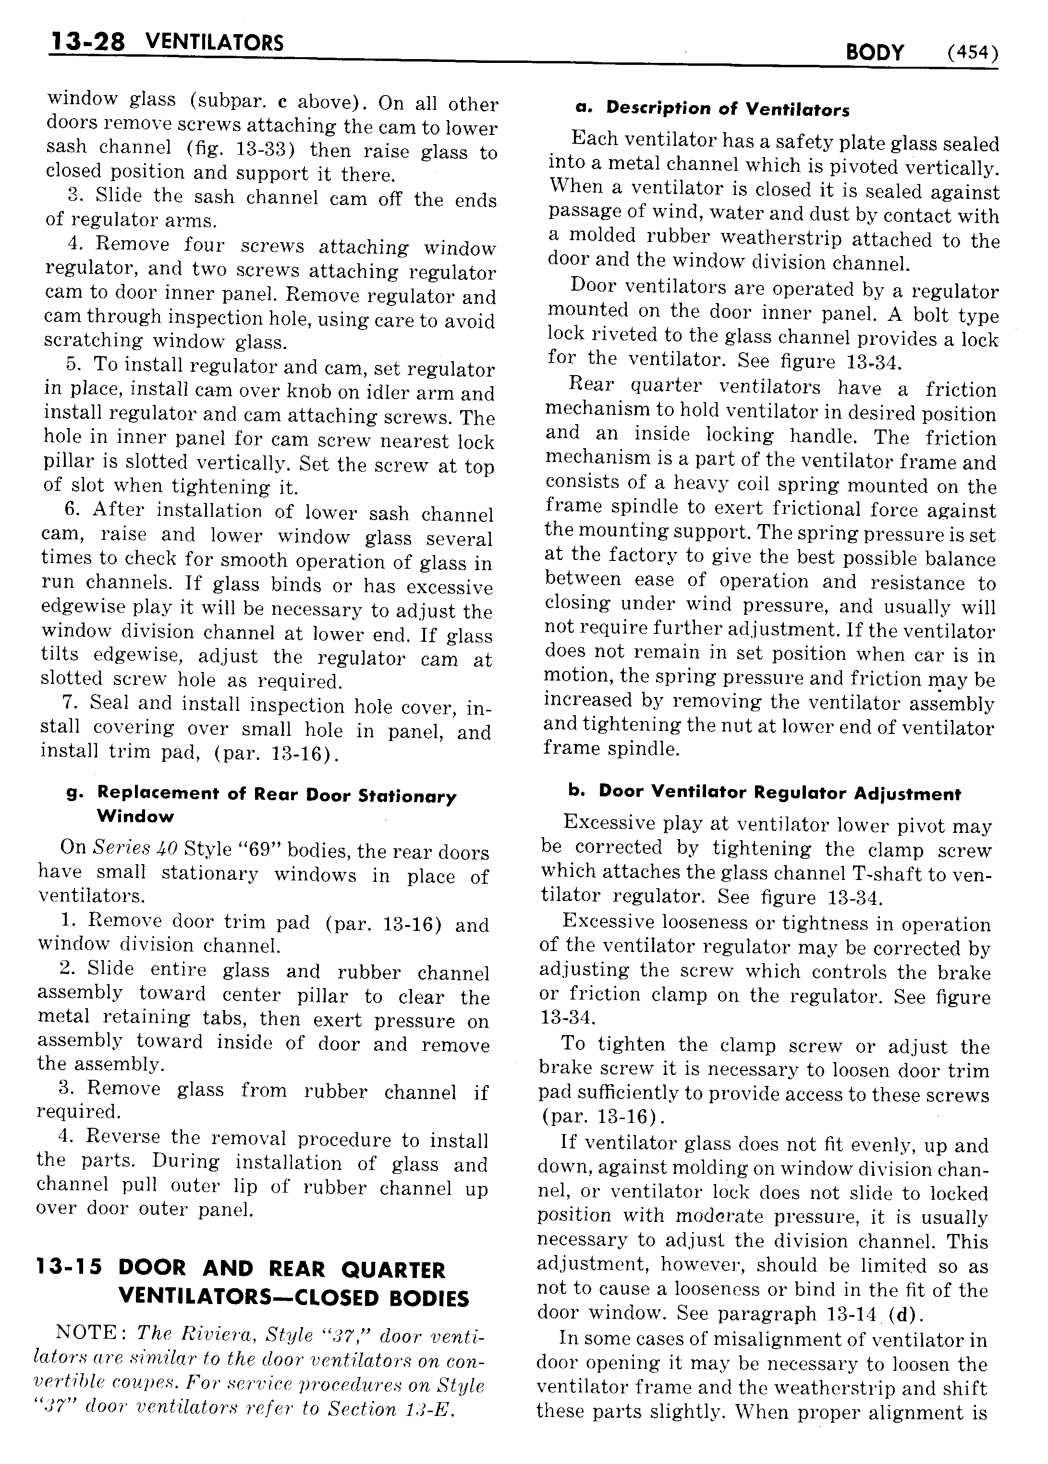 n_14 1951 Buick Shop Manual - Body-028-028.jpg